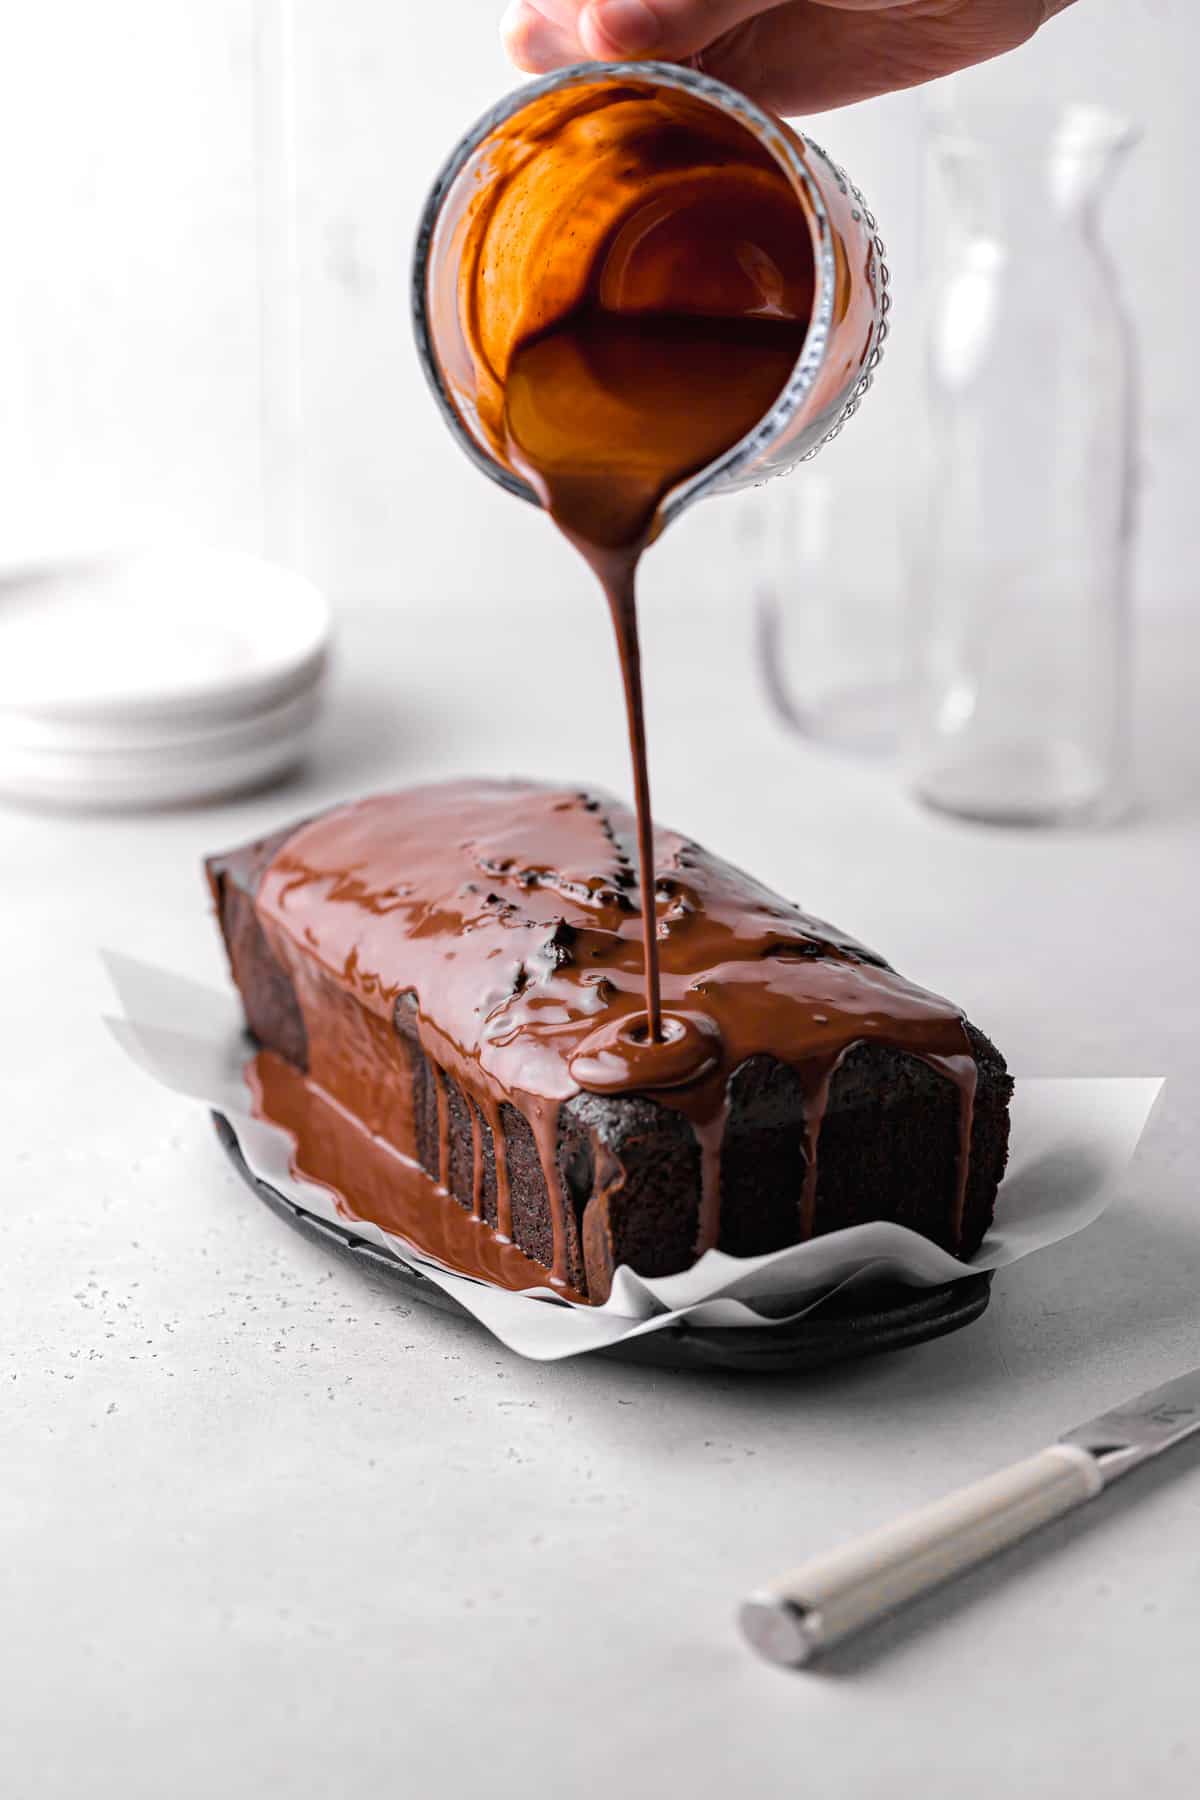 chocolate glaze being poured over chocolate pound cake.